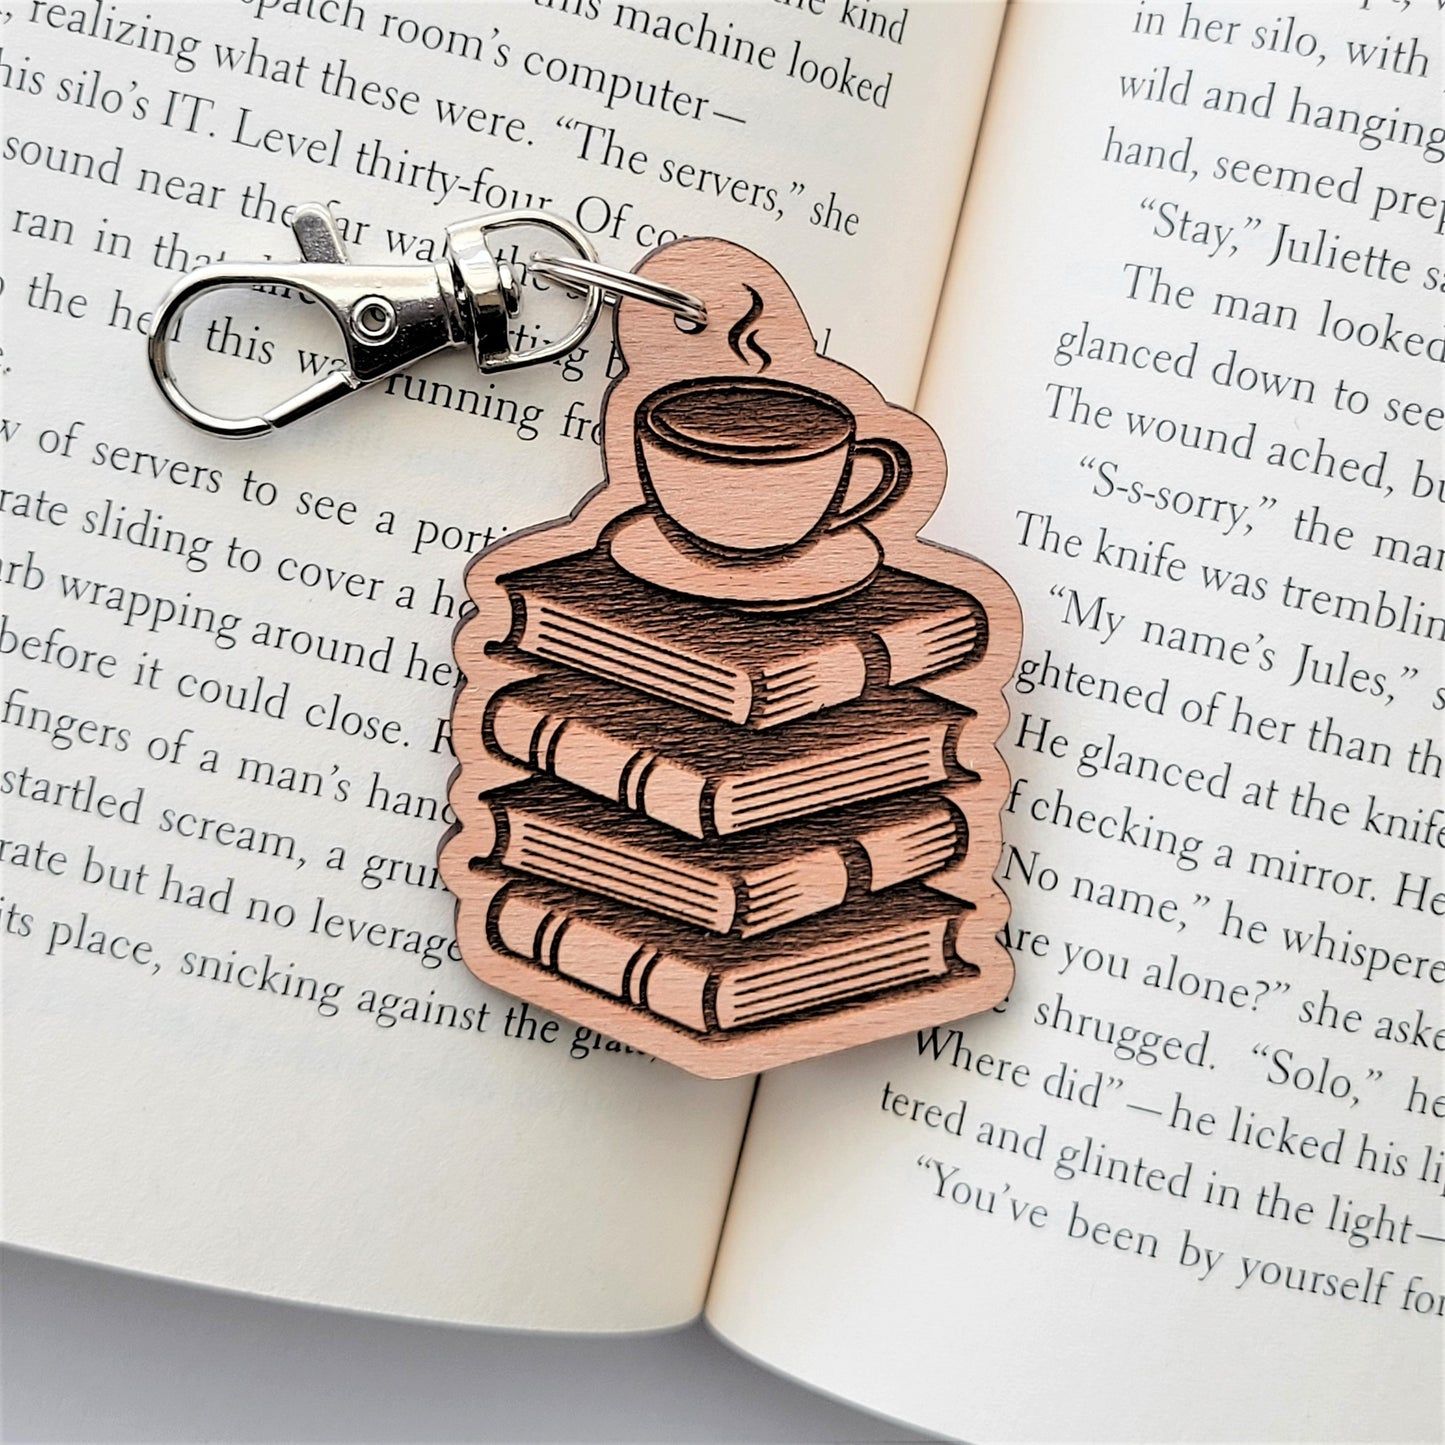 Coffee & Books Wooden Keychain